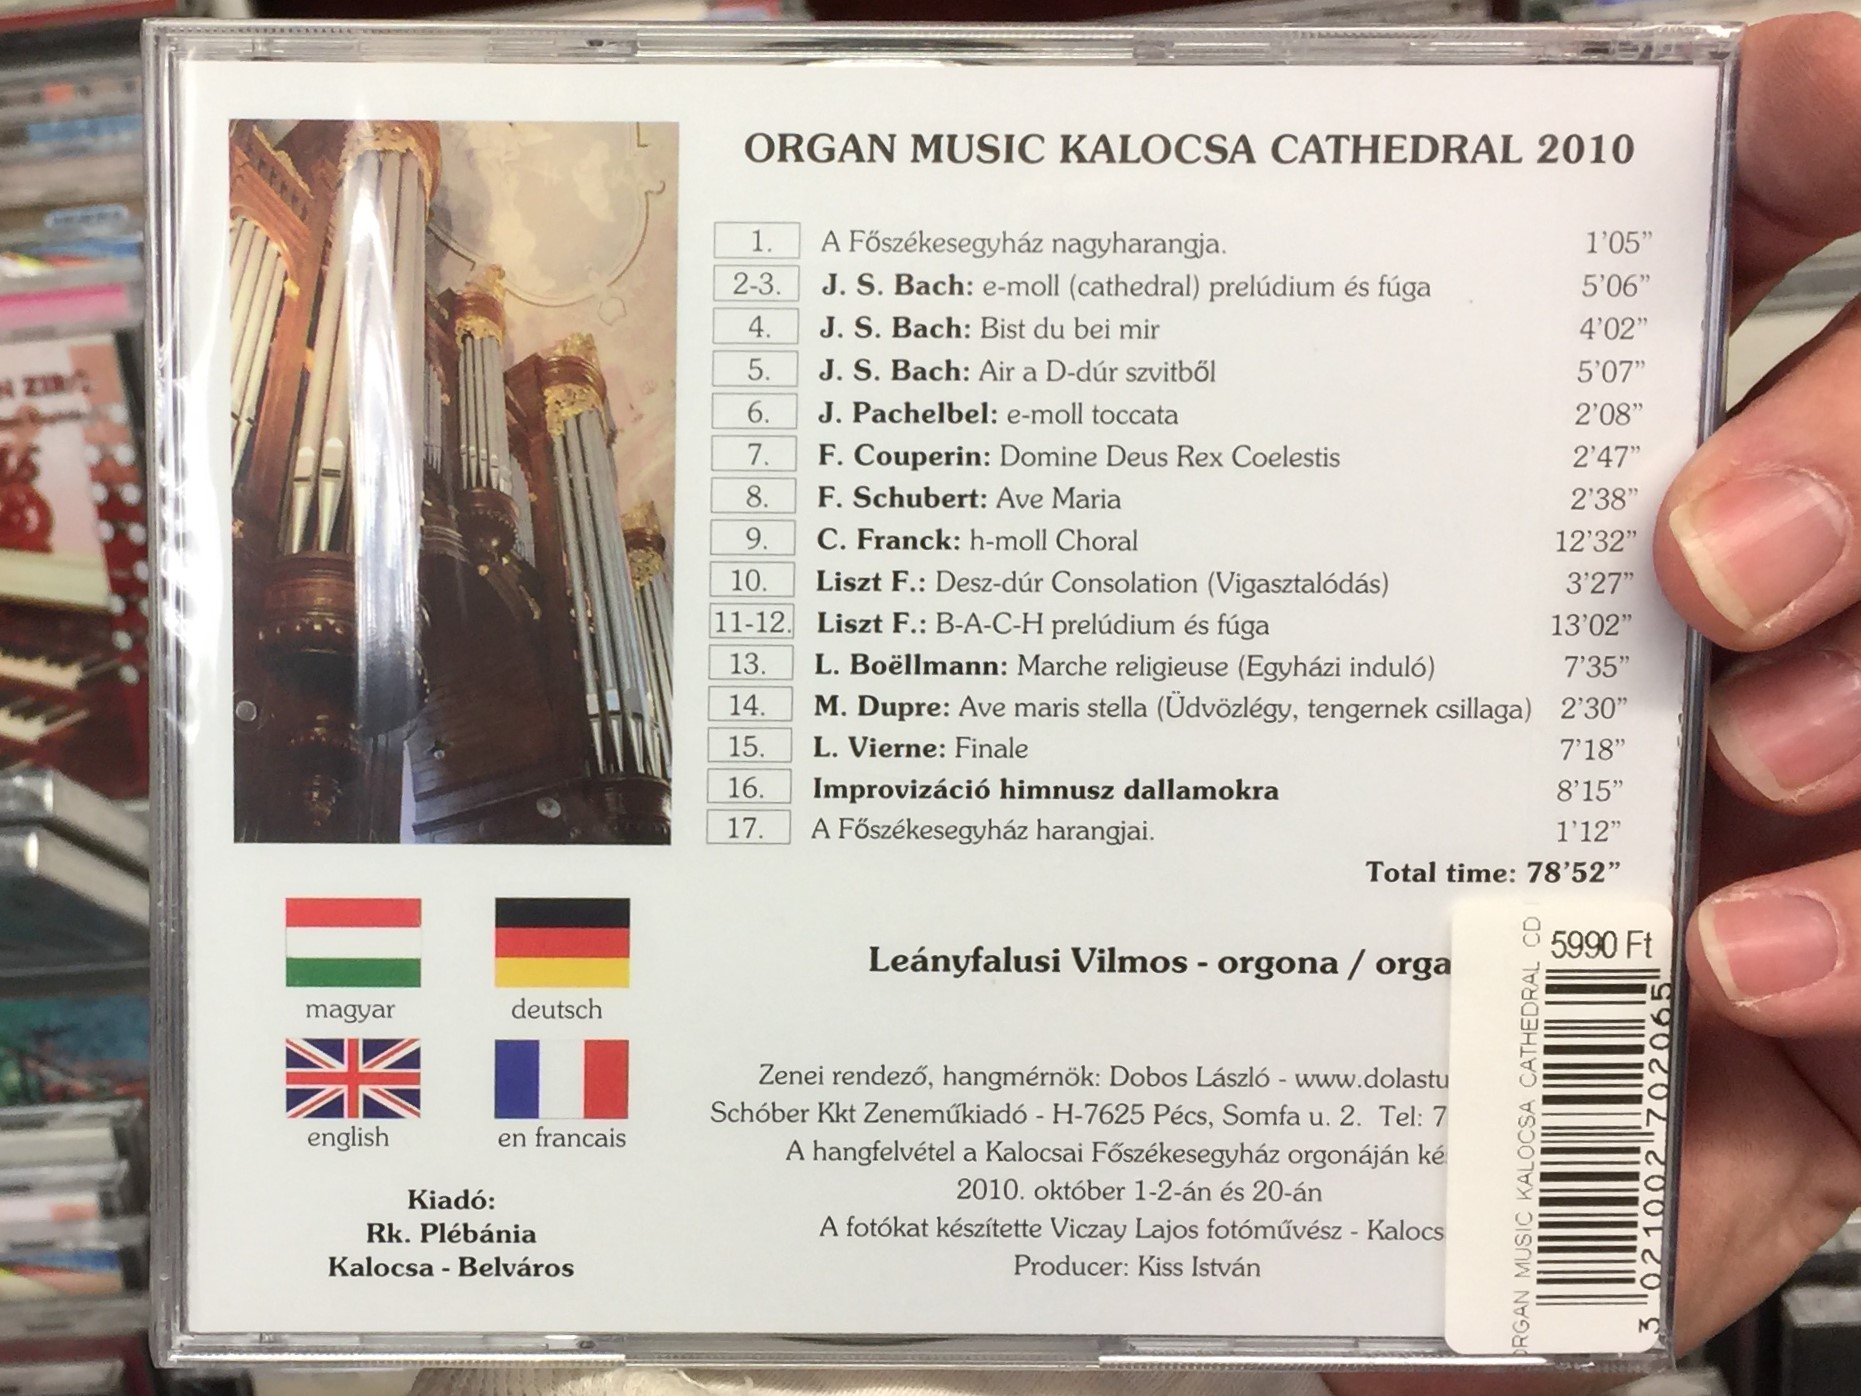 organ-music-kalocsa-cathedral-vilmos-leanyfalusi-audio-cd-2010-3021002702065-2-.jpg